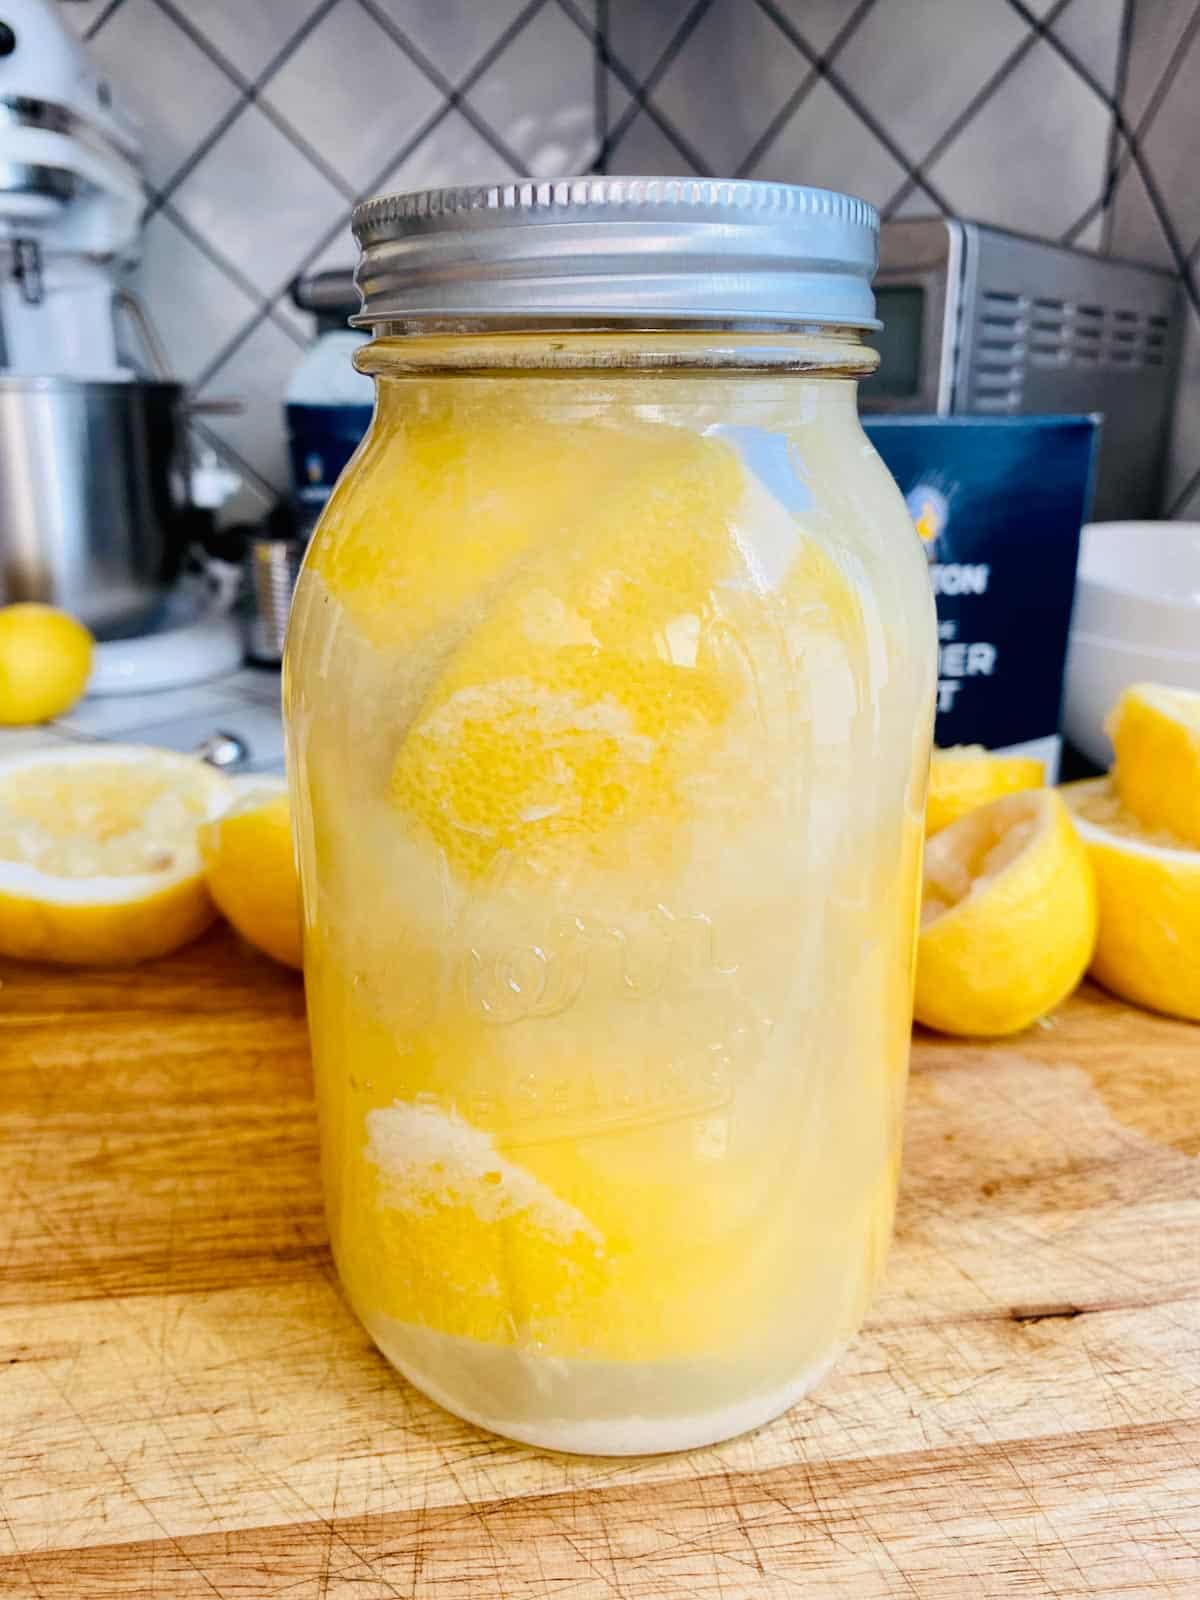 Preserved lemons in a mason jar